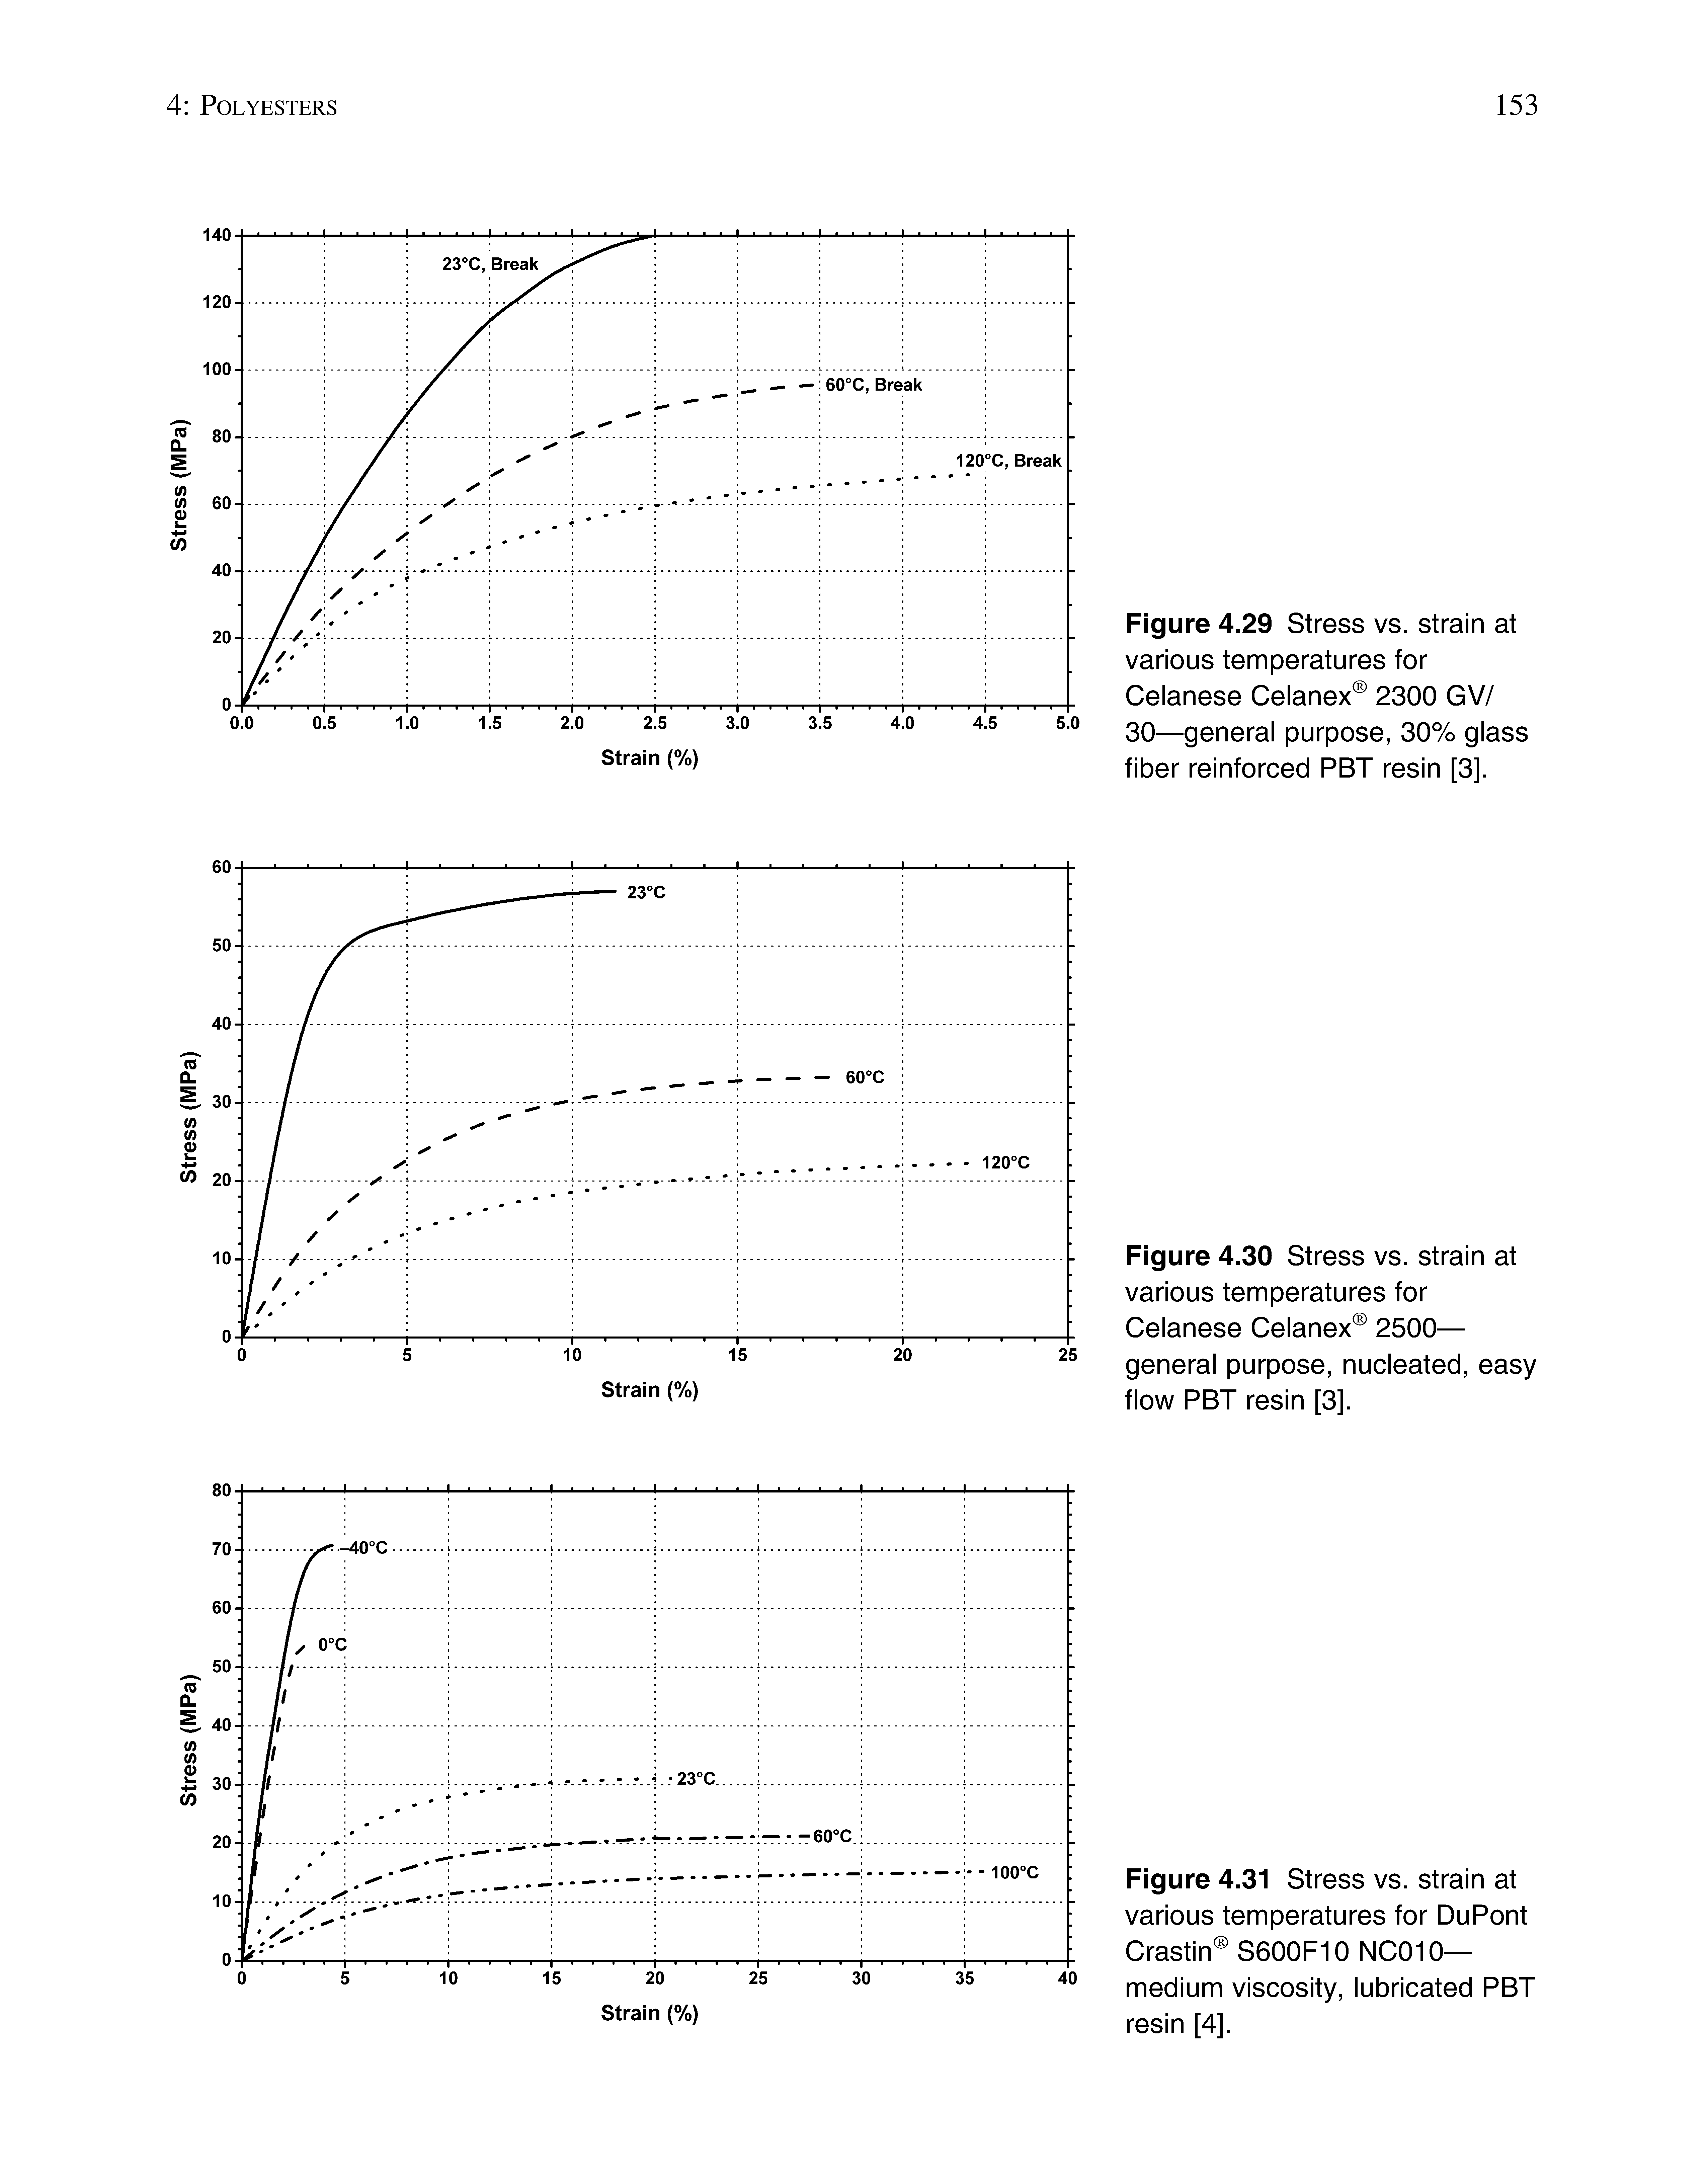 Figure 4.31 Stress vs. strain at various temperatures for DuPont Crastin S600F10 NC010— medium viscosity, lubricated PBT resin [4].